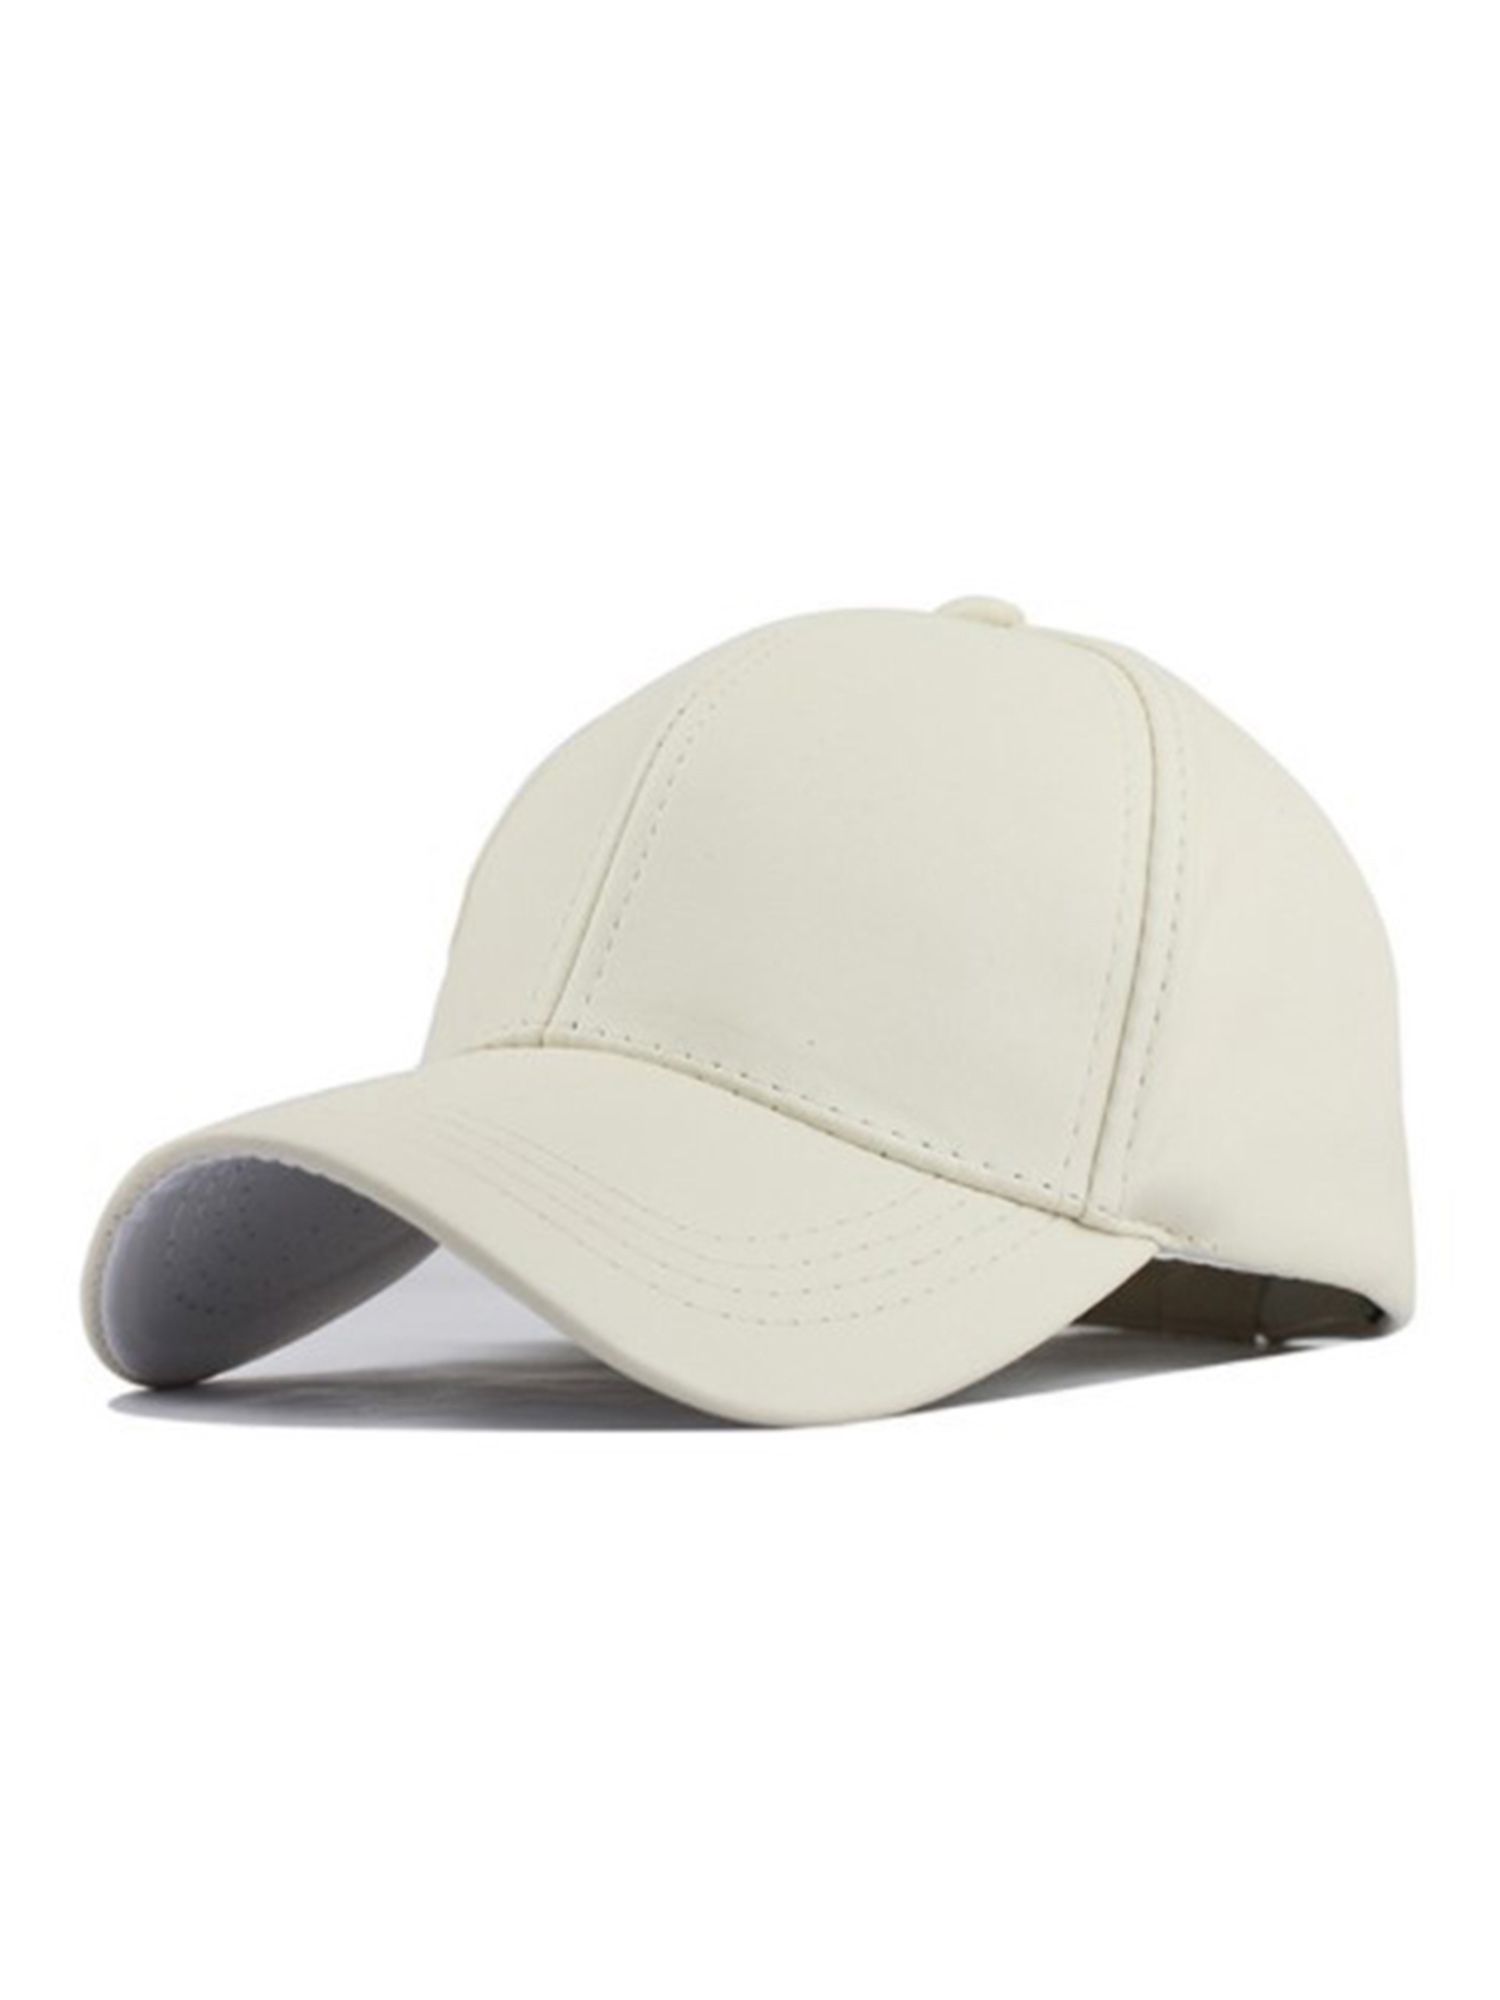 ANYSENSEPS Men Solid Faux Leather Baseball Cap Adjustable Trucker Hat Sport Sun Cap | Walmart (US)